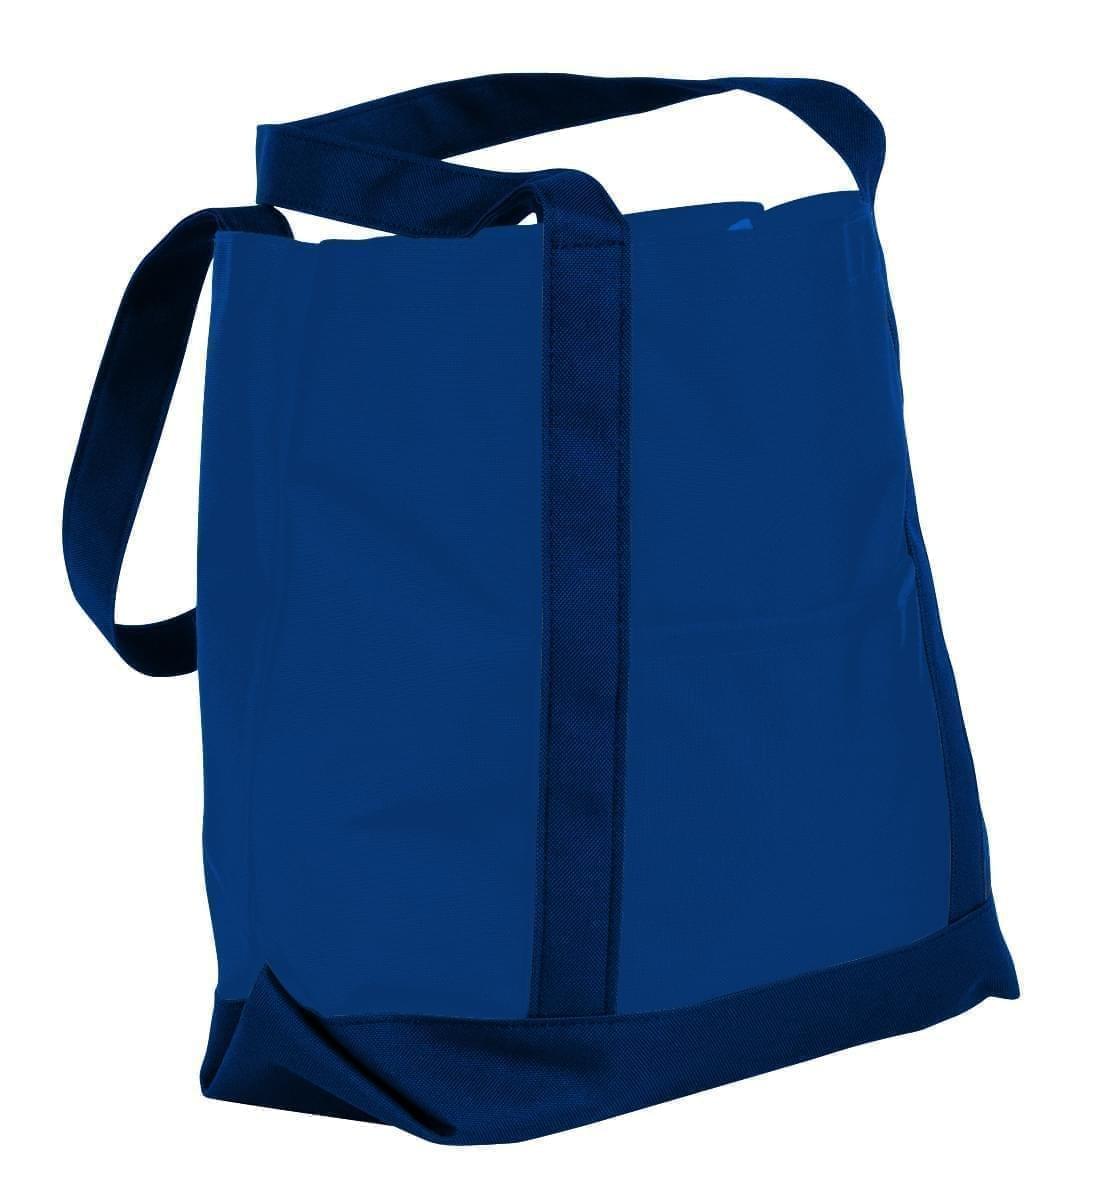 USA Made Canvas Fashion Tote Bags, Royal Blue-Navy, XAACL1UAFI